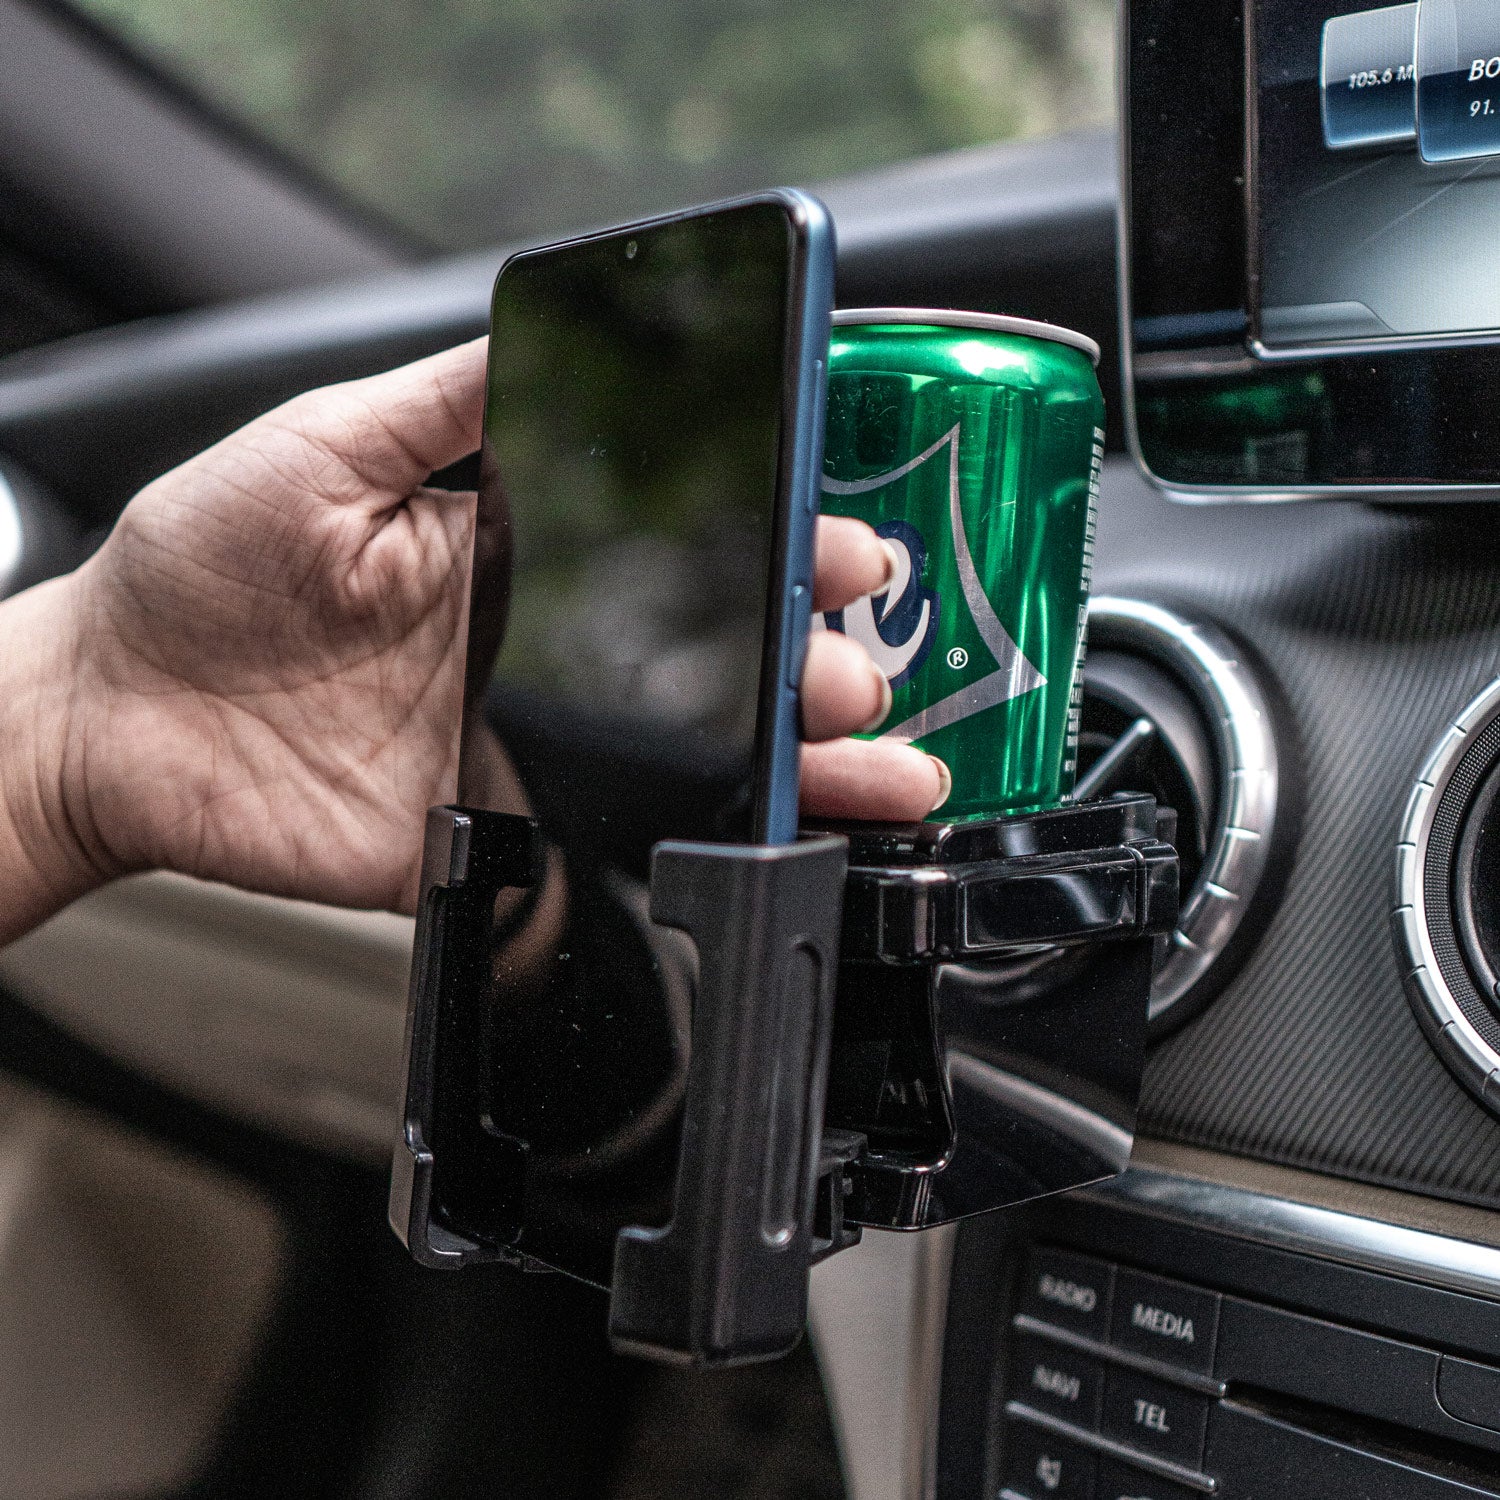 Smartphone & Drink AC Holder